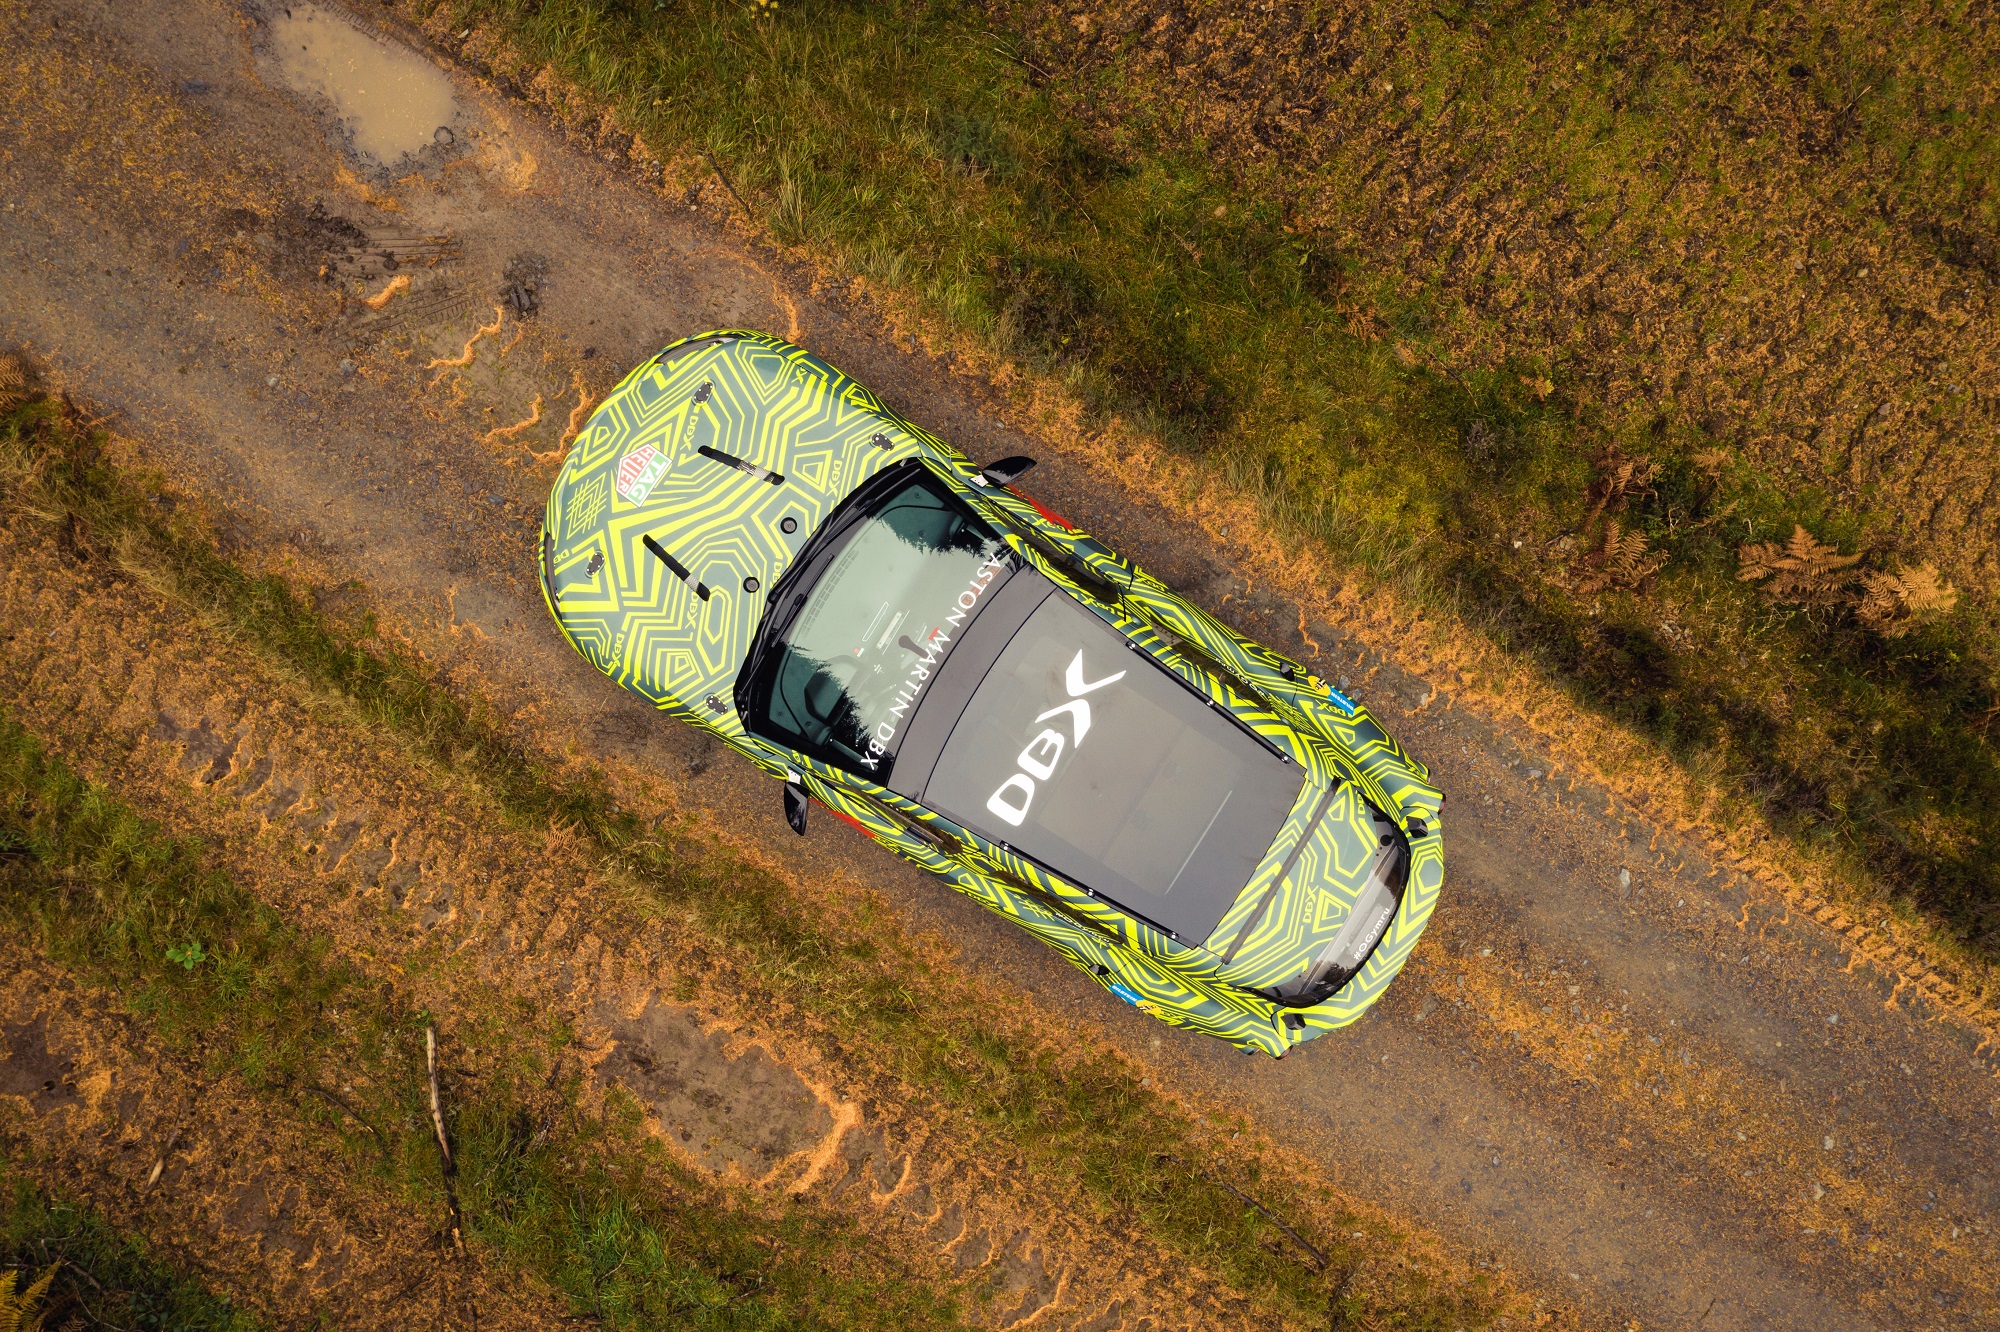 2019 Aston Martin DBX SUV Announcement 6SpeedOnline.com